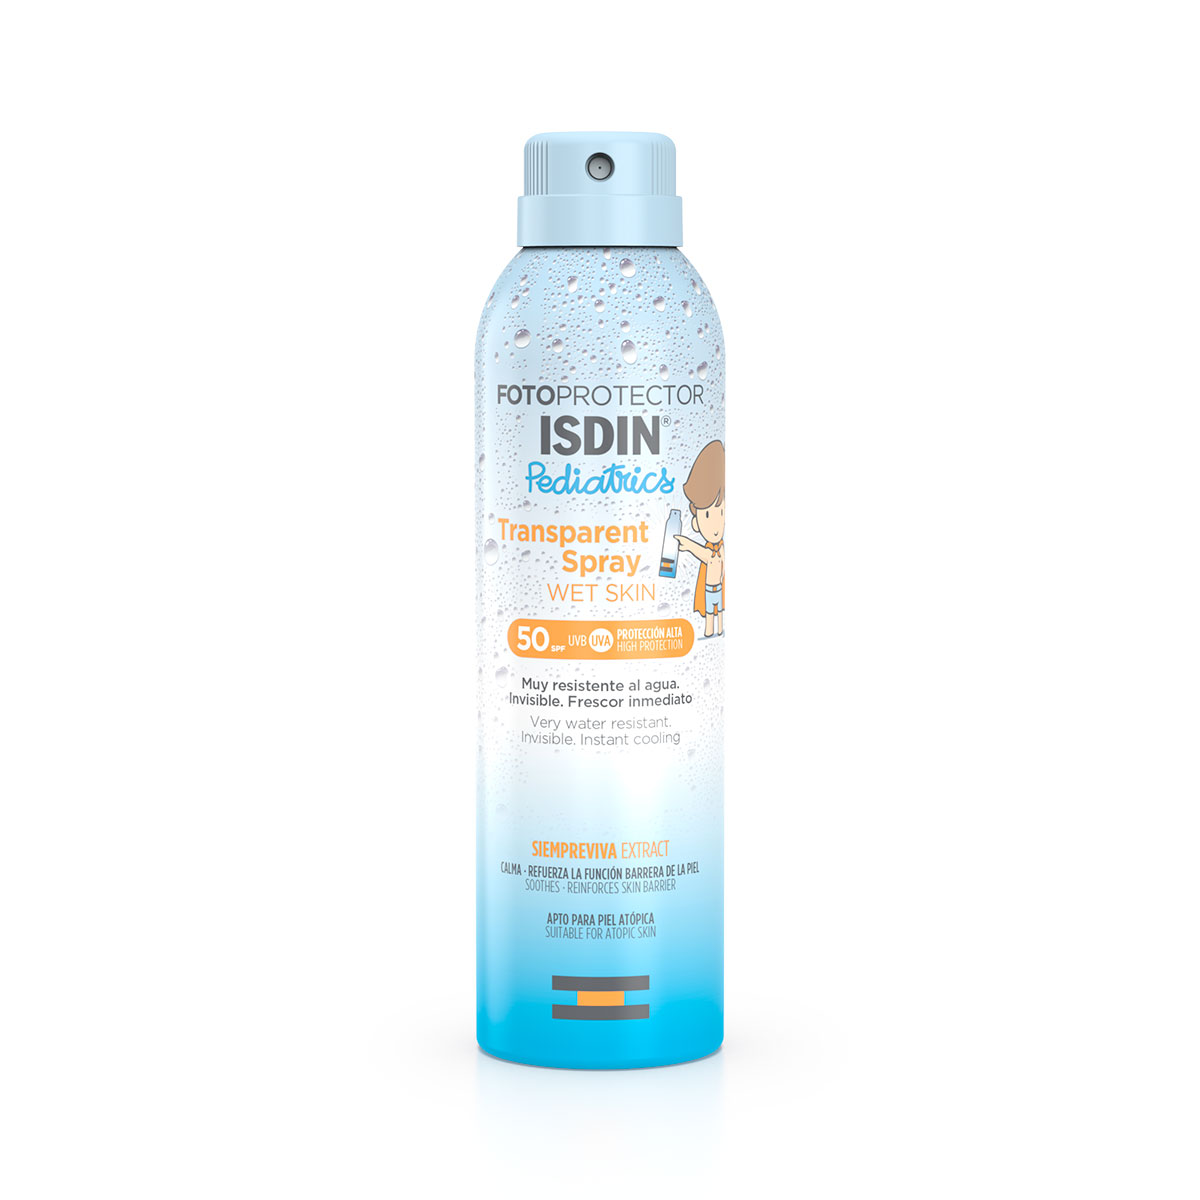 Isdin Fotoprotector Pediatrics Transparent Spray Wet Skin SPF51